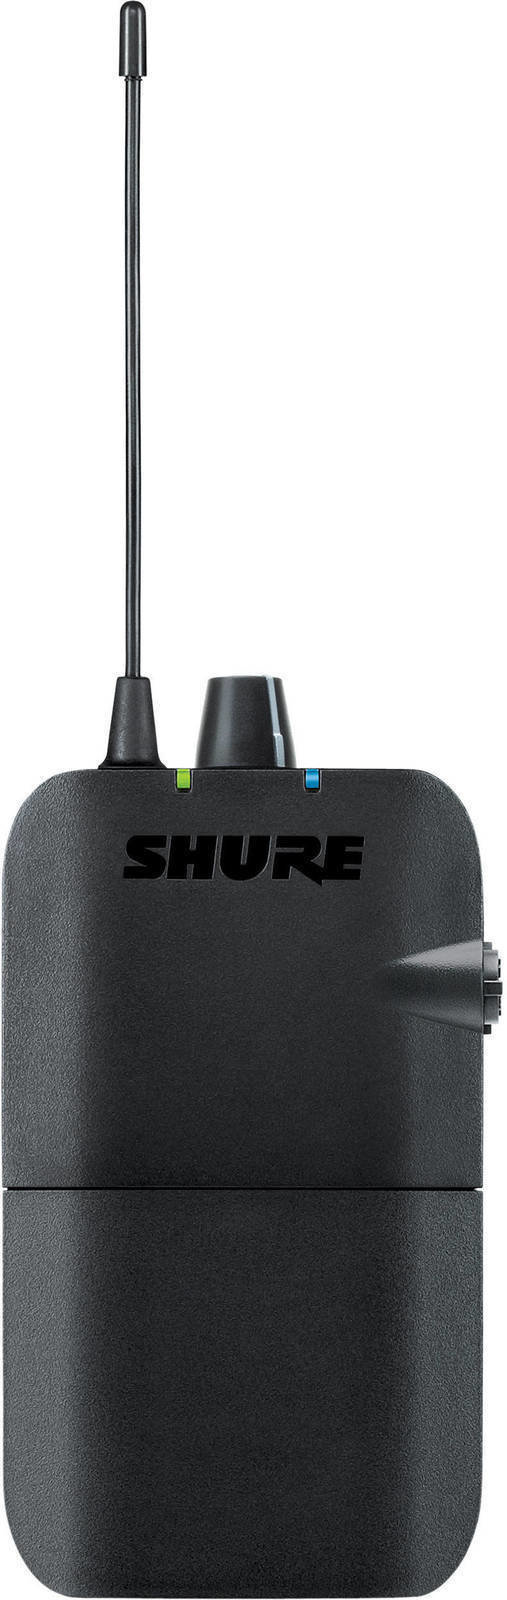 Shure P3R - PSM 300 Bodypack Receiver K3E: 606-630 MHz